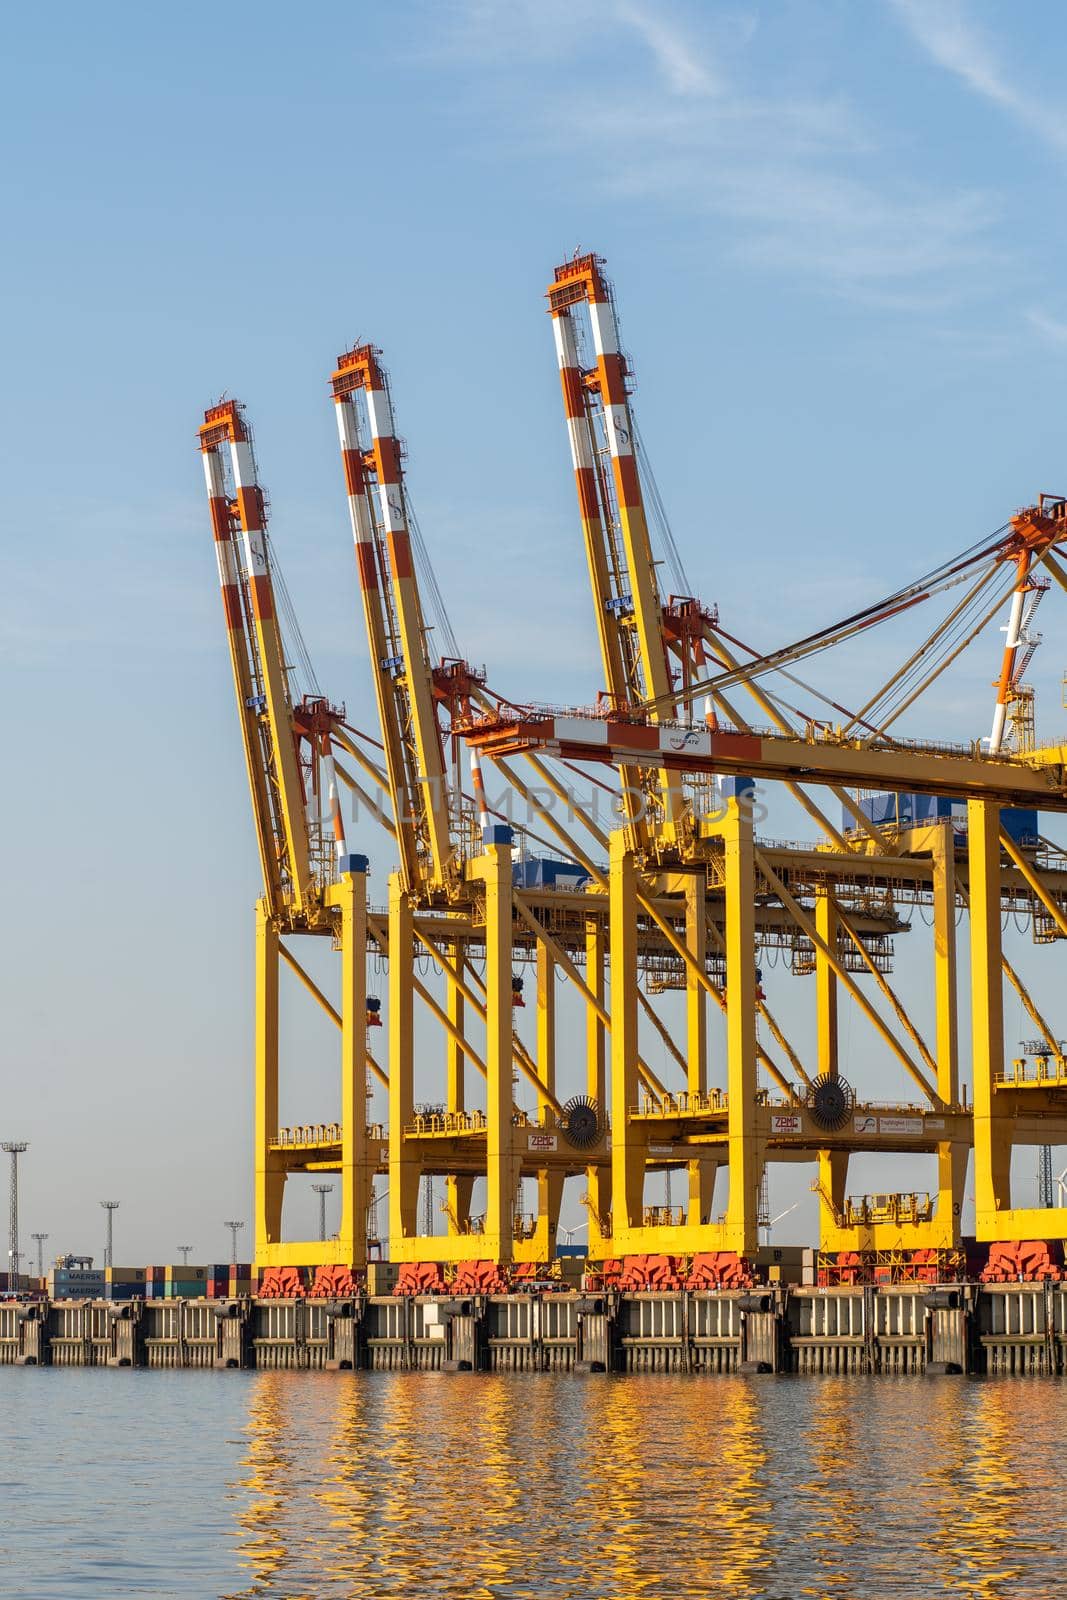 Bremerhaven, Geramny - September 15, 2020: Gantry cranes at EUROGATE Container Terminal